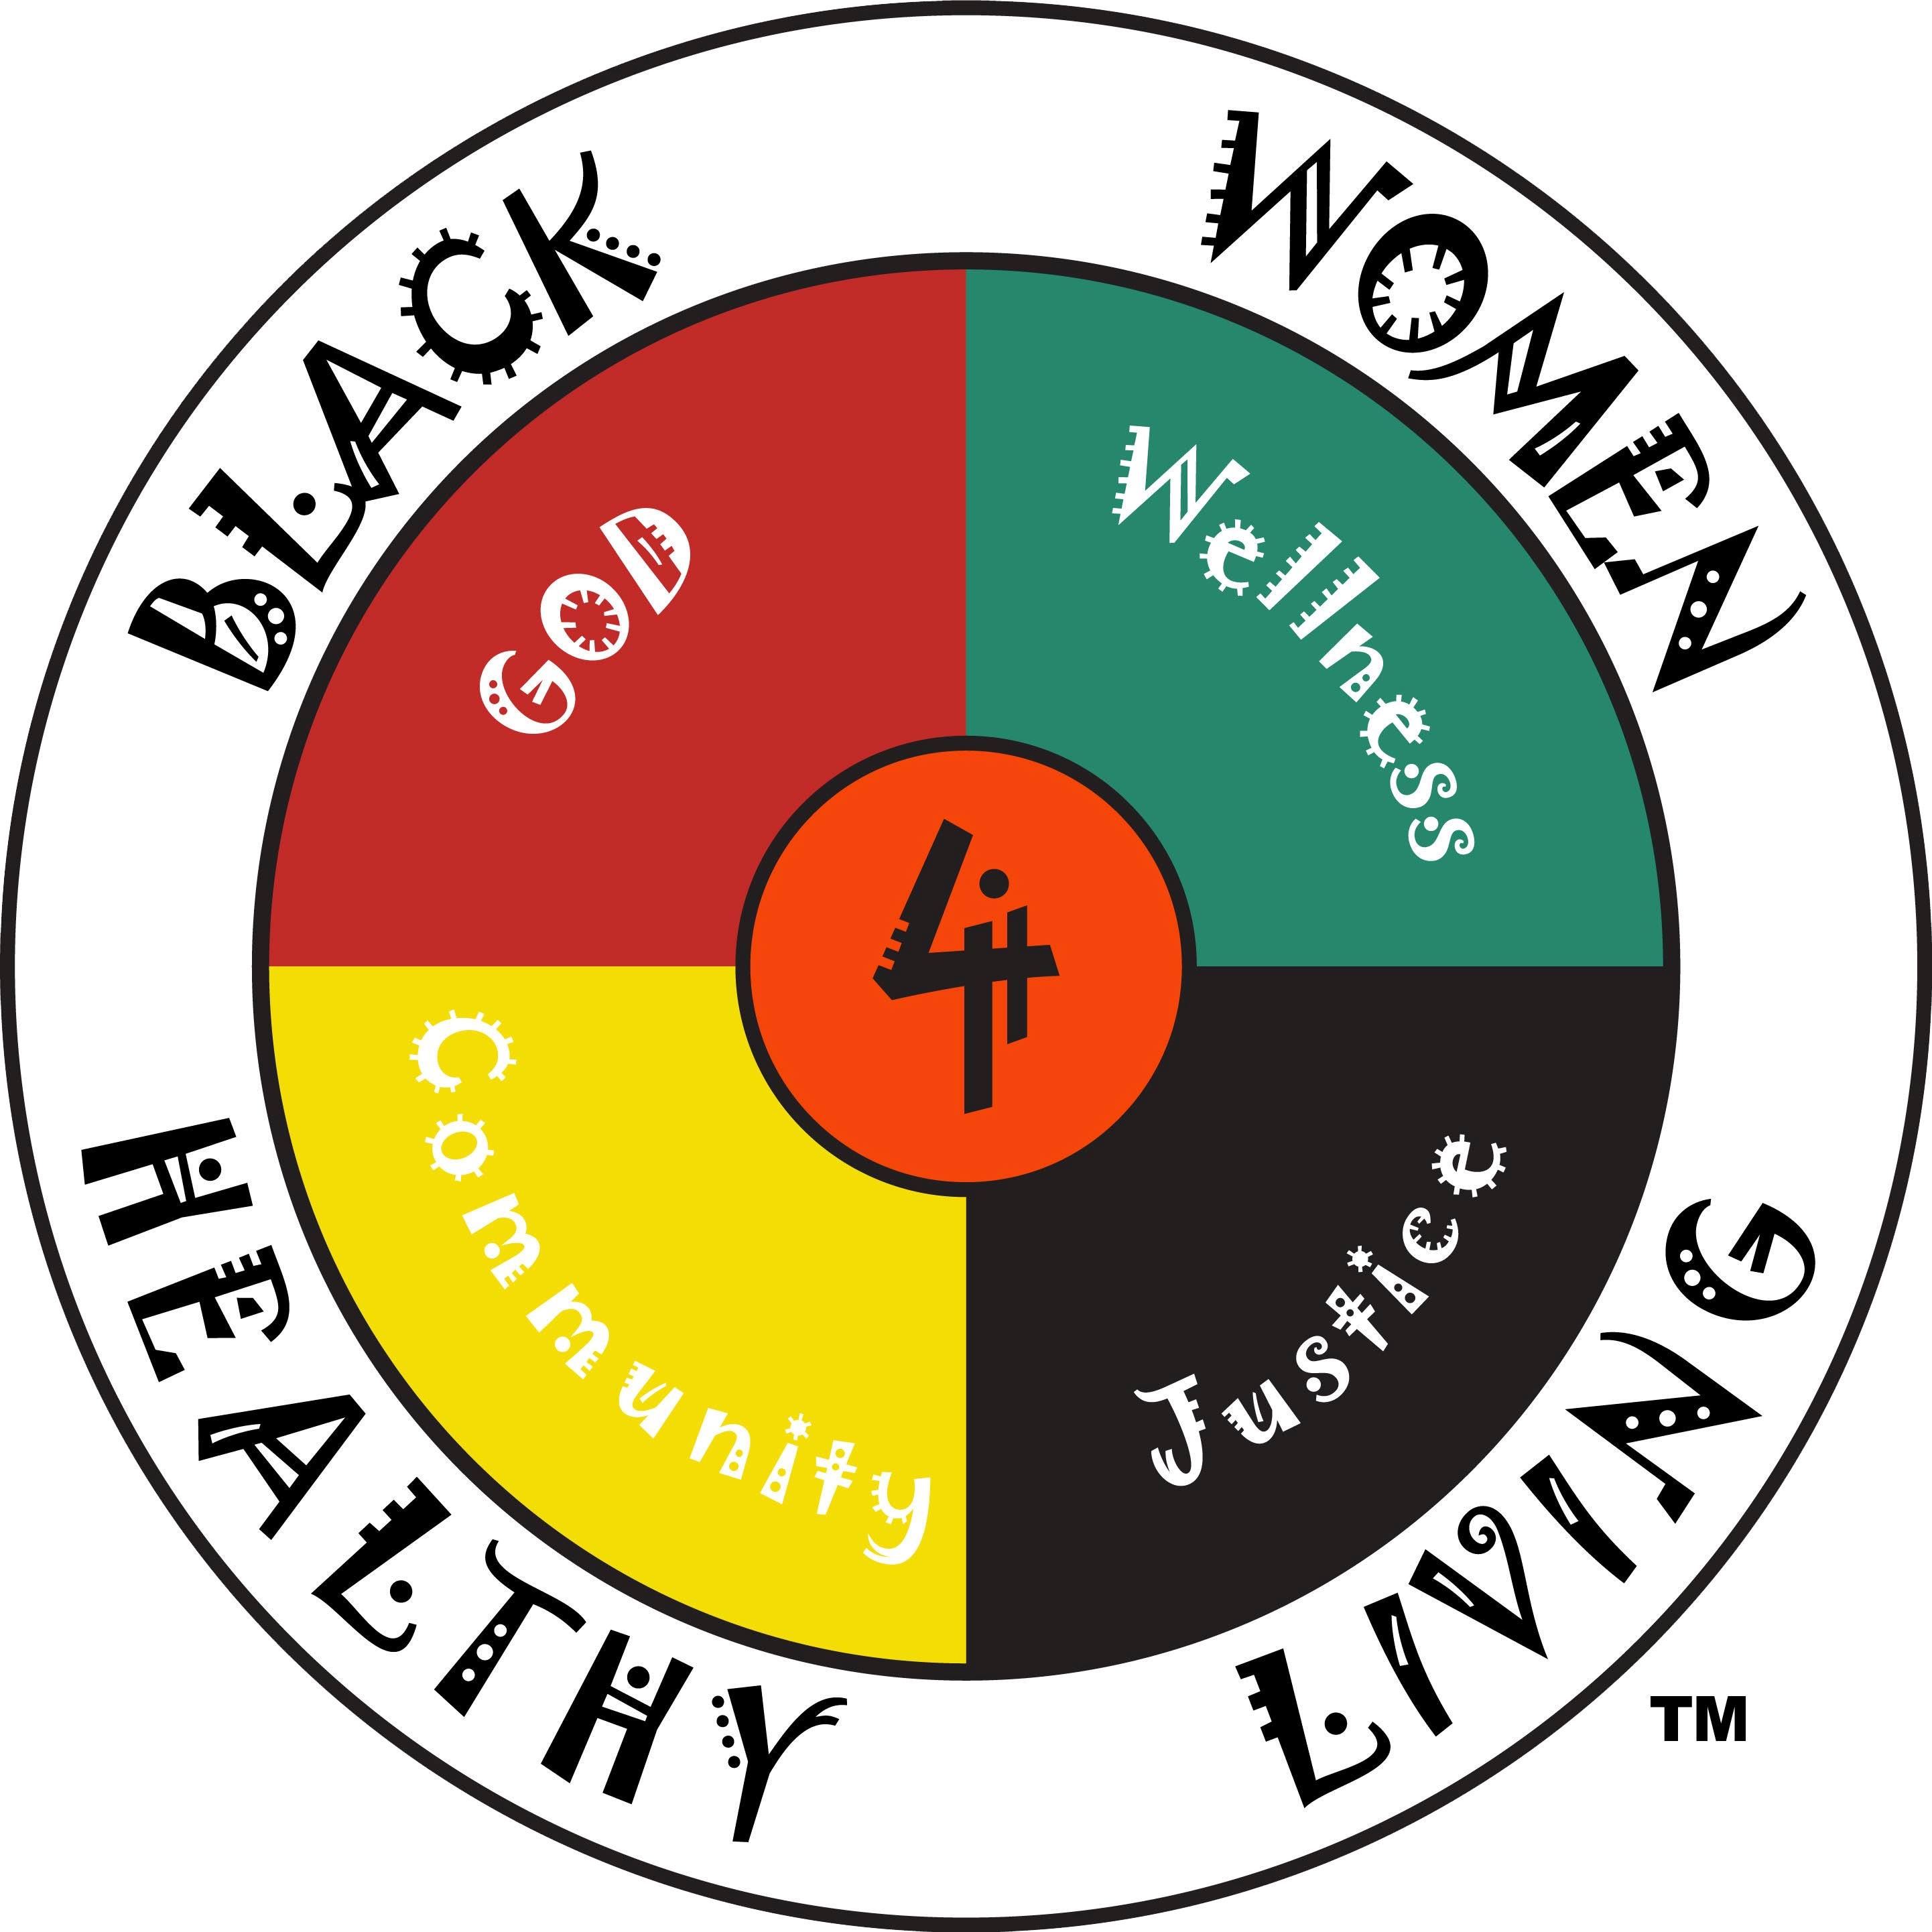 Black Women 4 Healthy Living logo